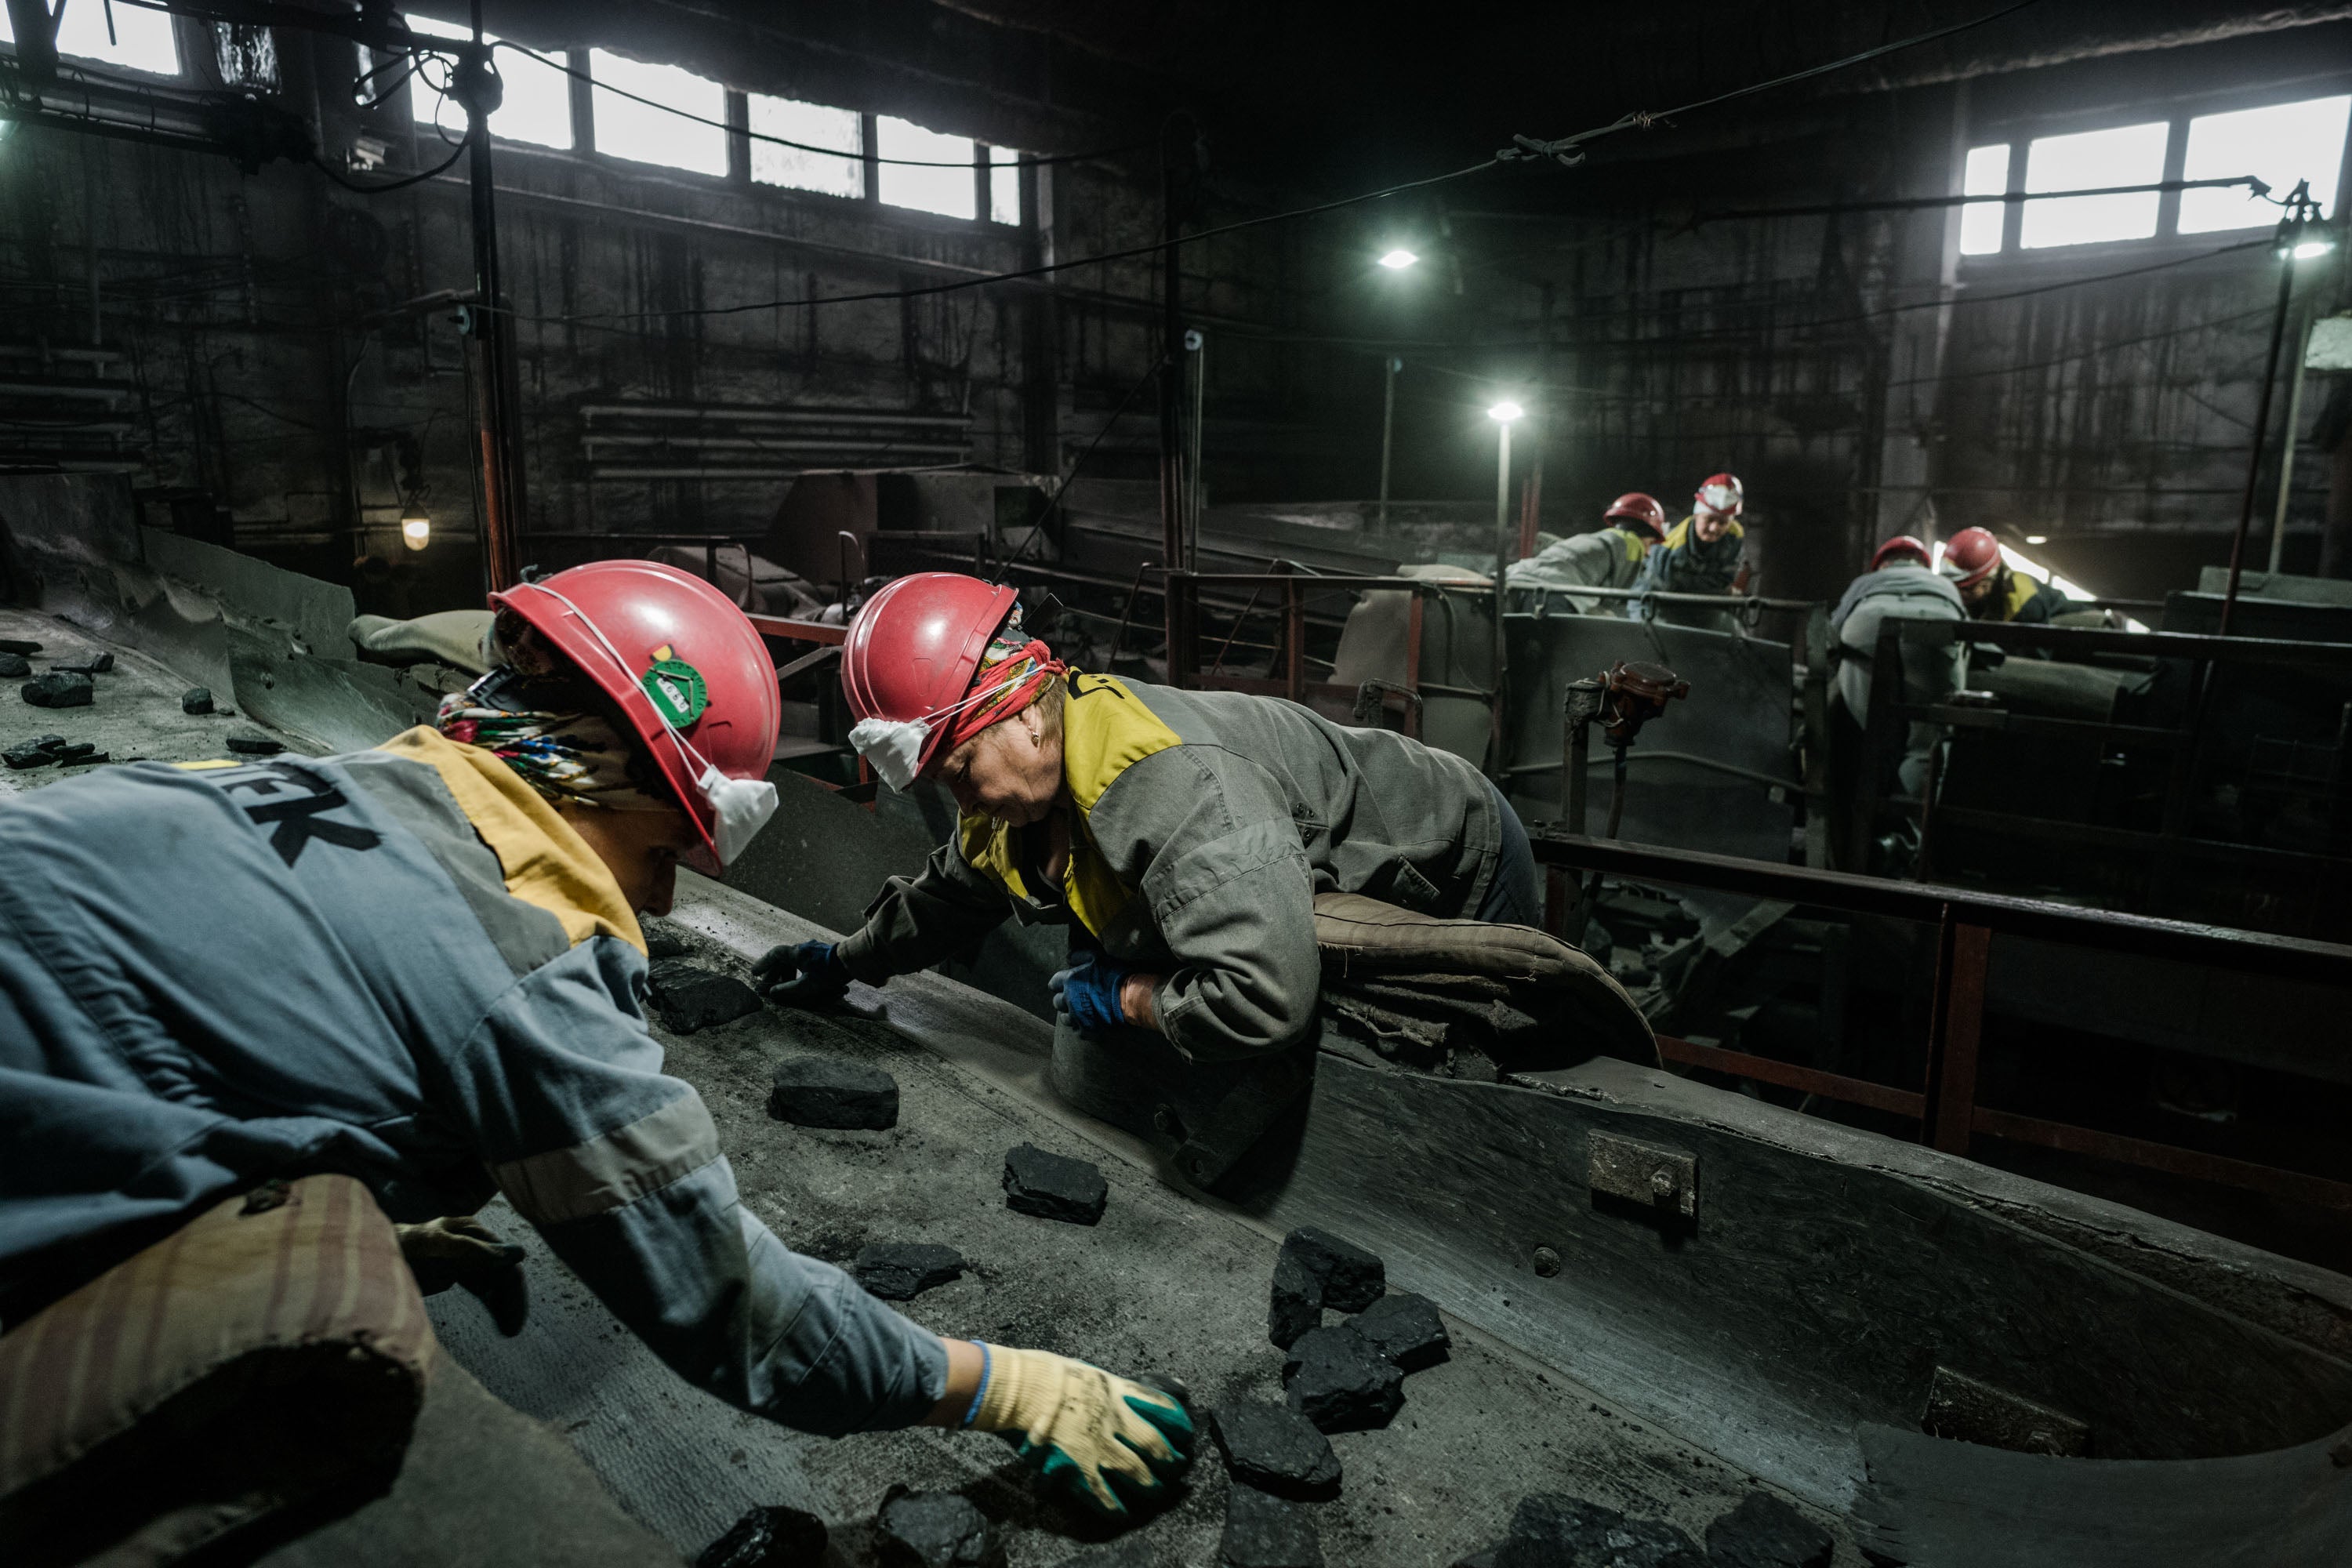 Workers sort coal in a mine in Ukraine's eastern Donbas region